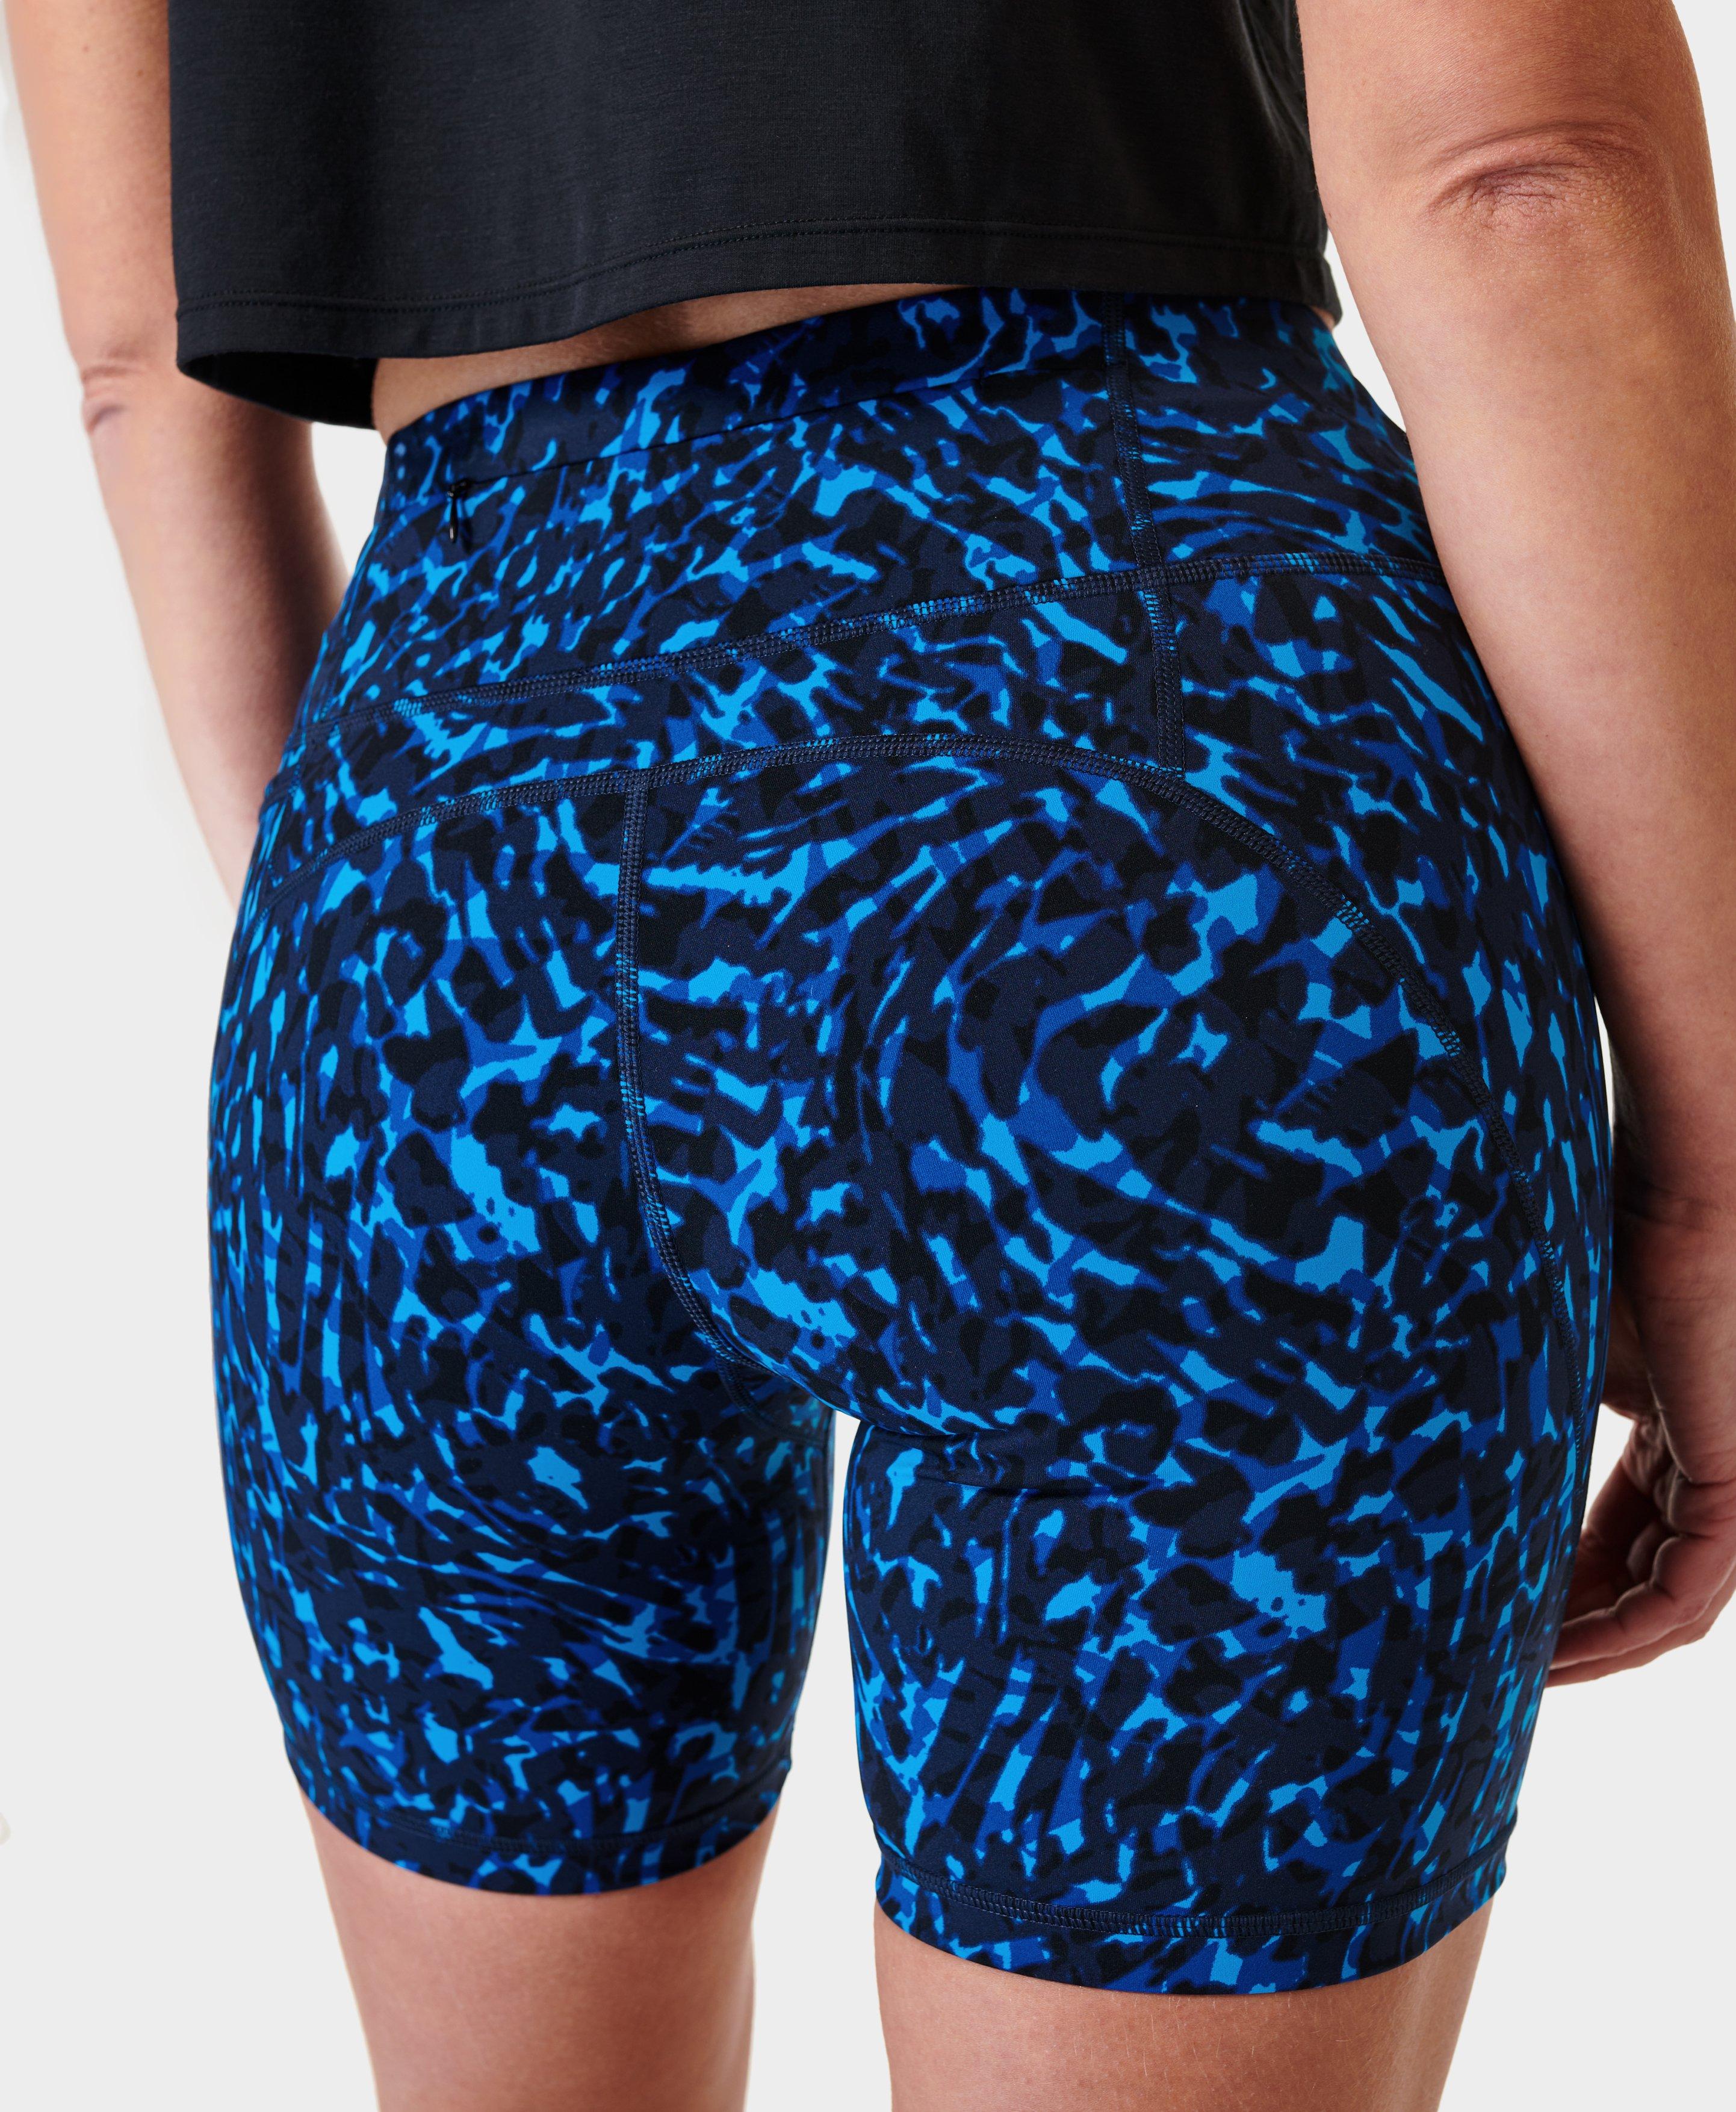 Power 6 Cycling Shorts - Blue Animal Swirl Print, Women's Shorts + Skorts